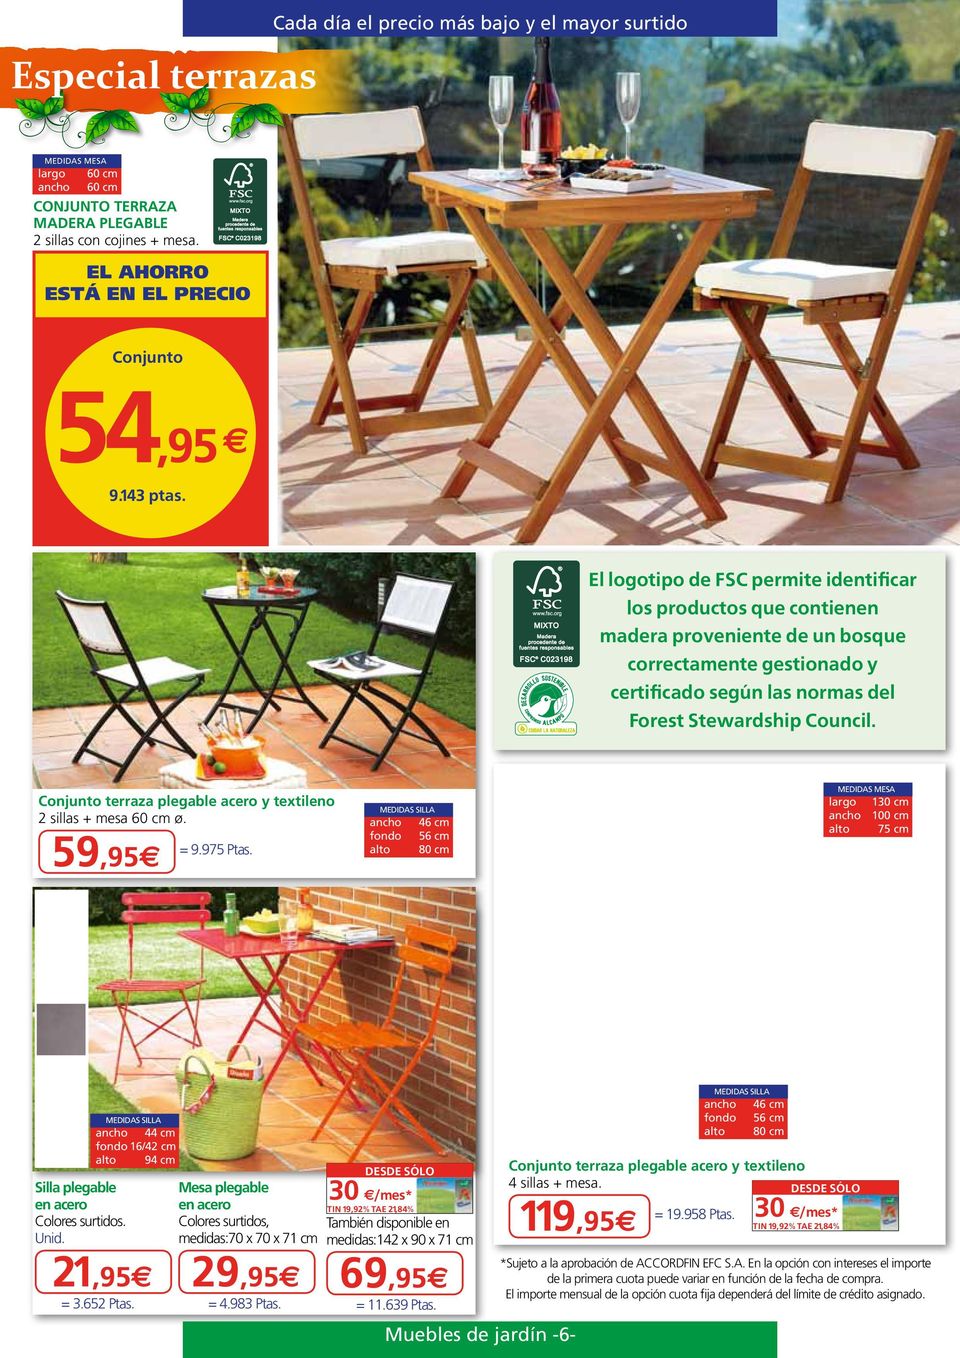 Conjunto terraza plegable acero y textileno 2 sillas + mesa 60 cm ø. 59,95E = 9.975 Ptas.